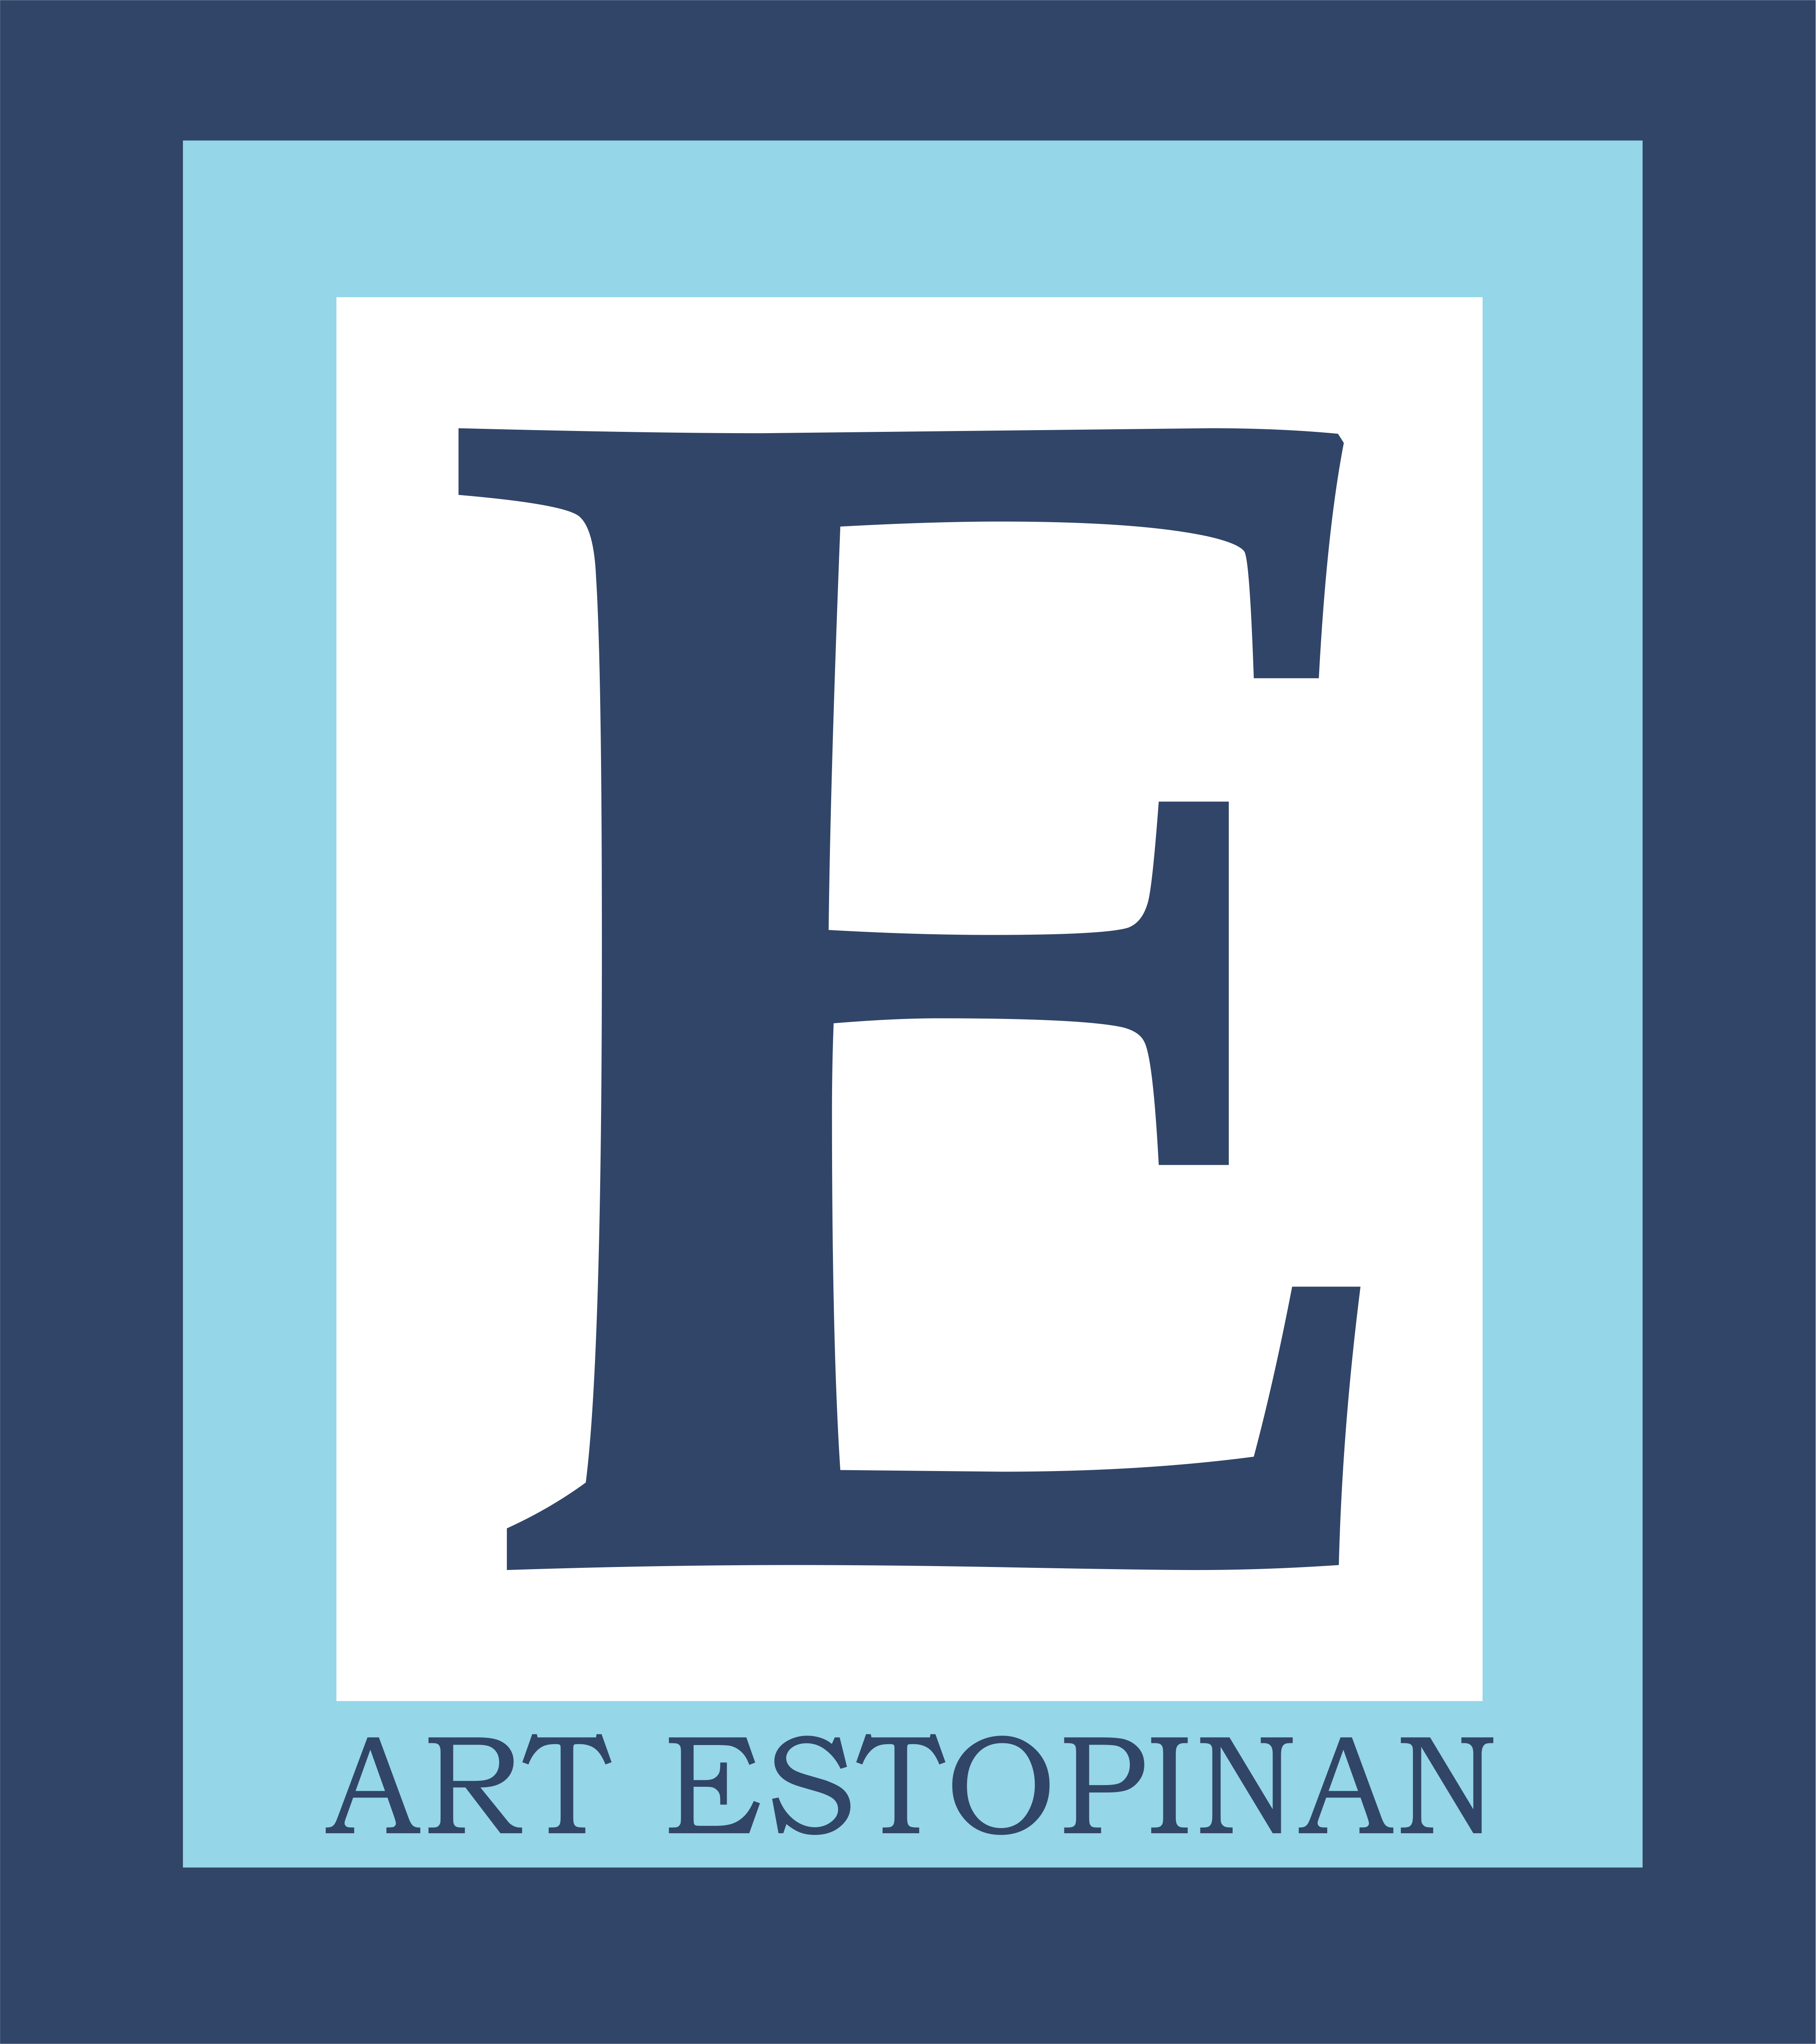 The Estopinan Group